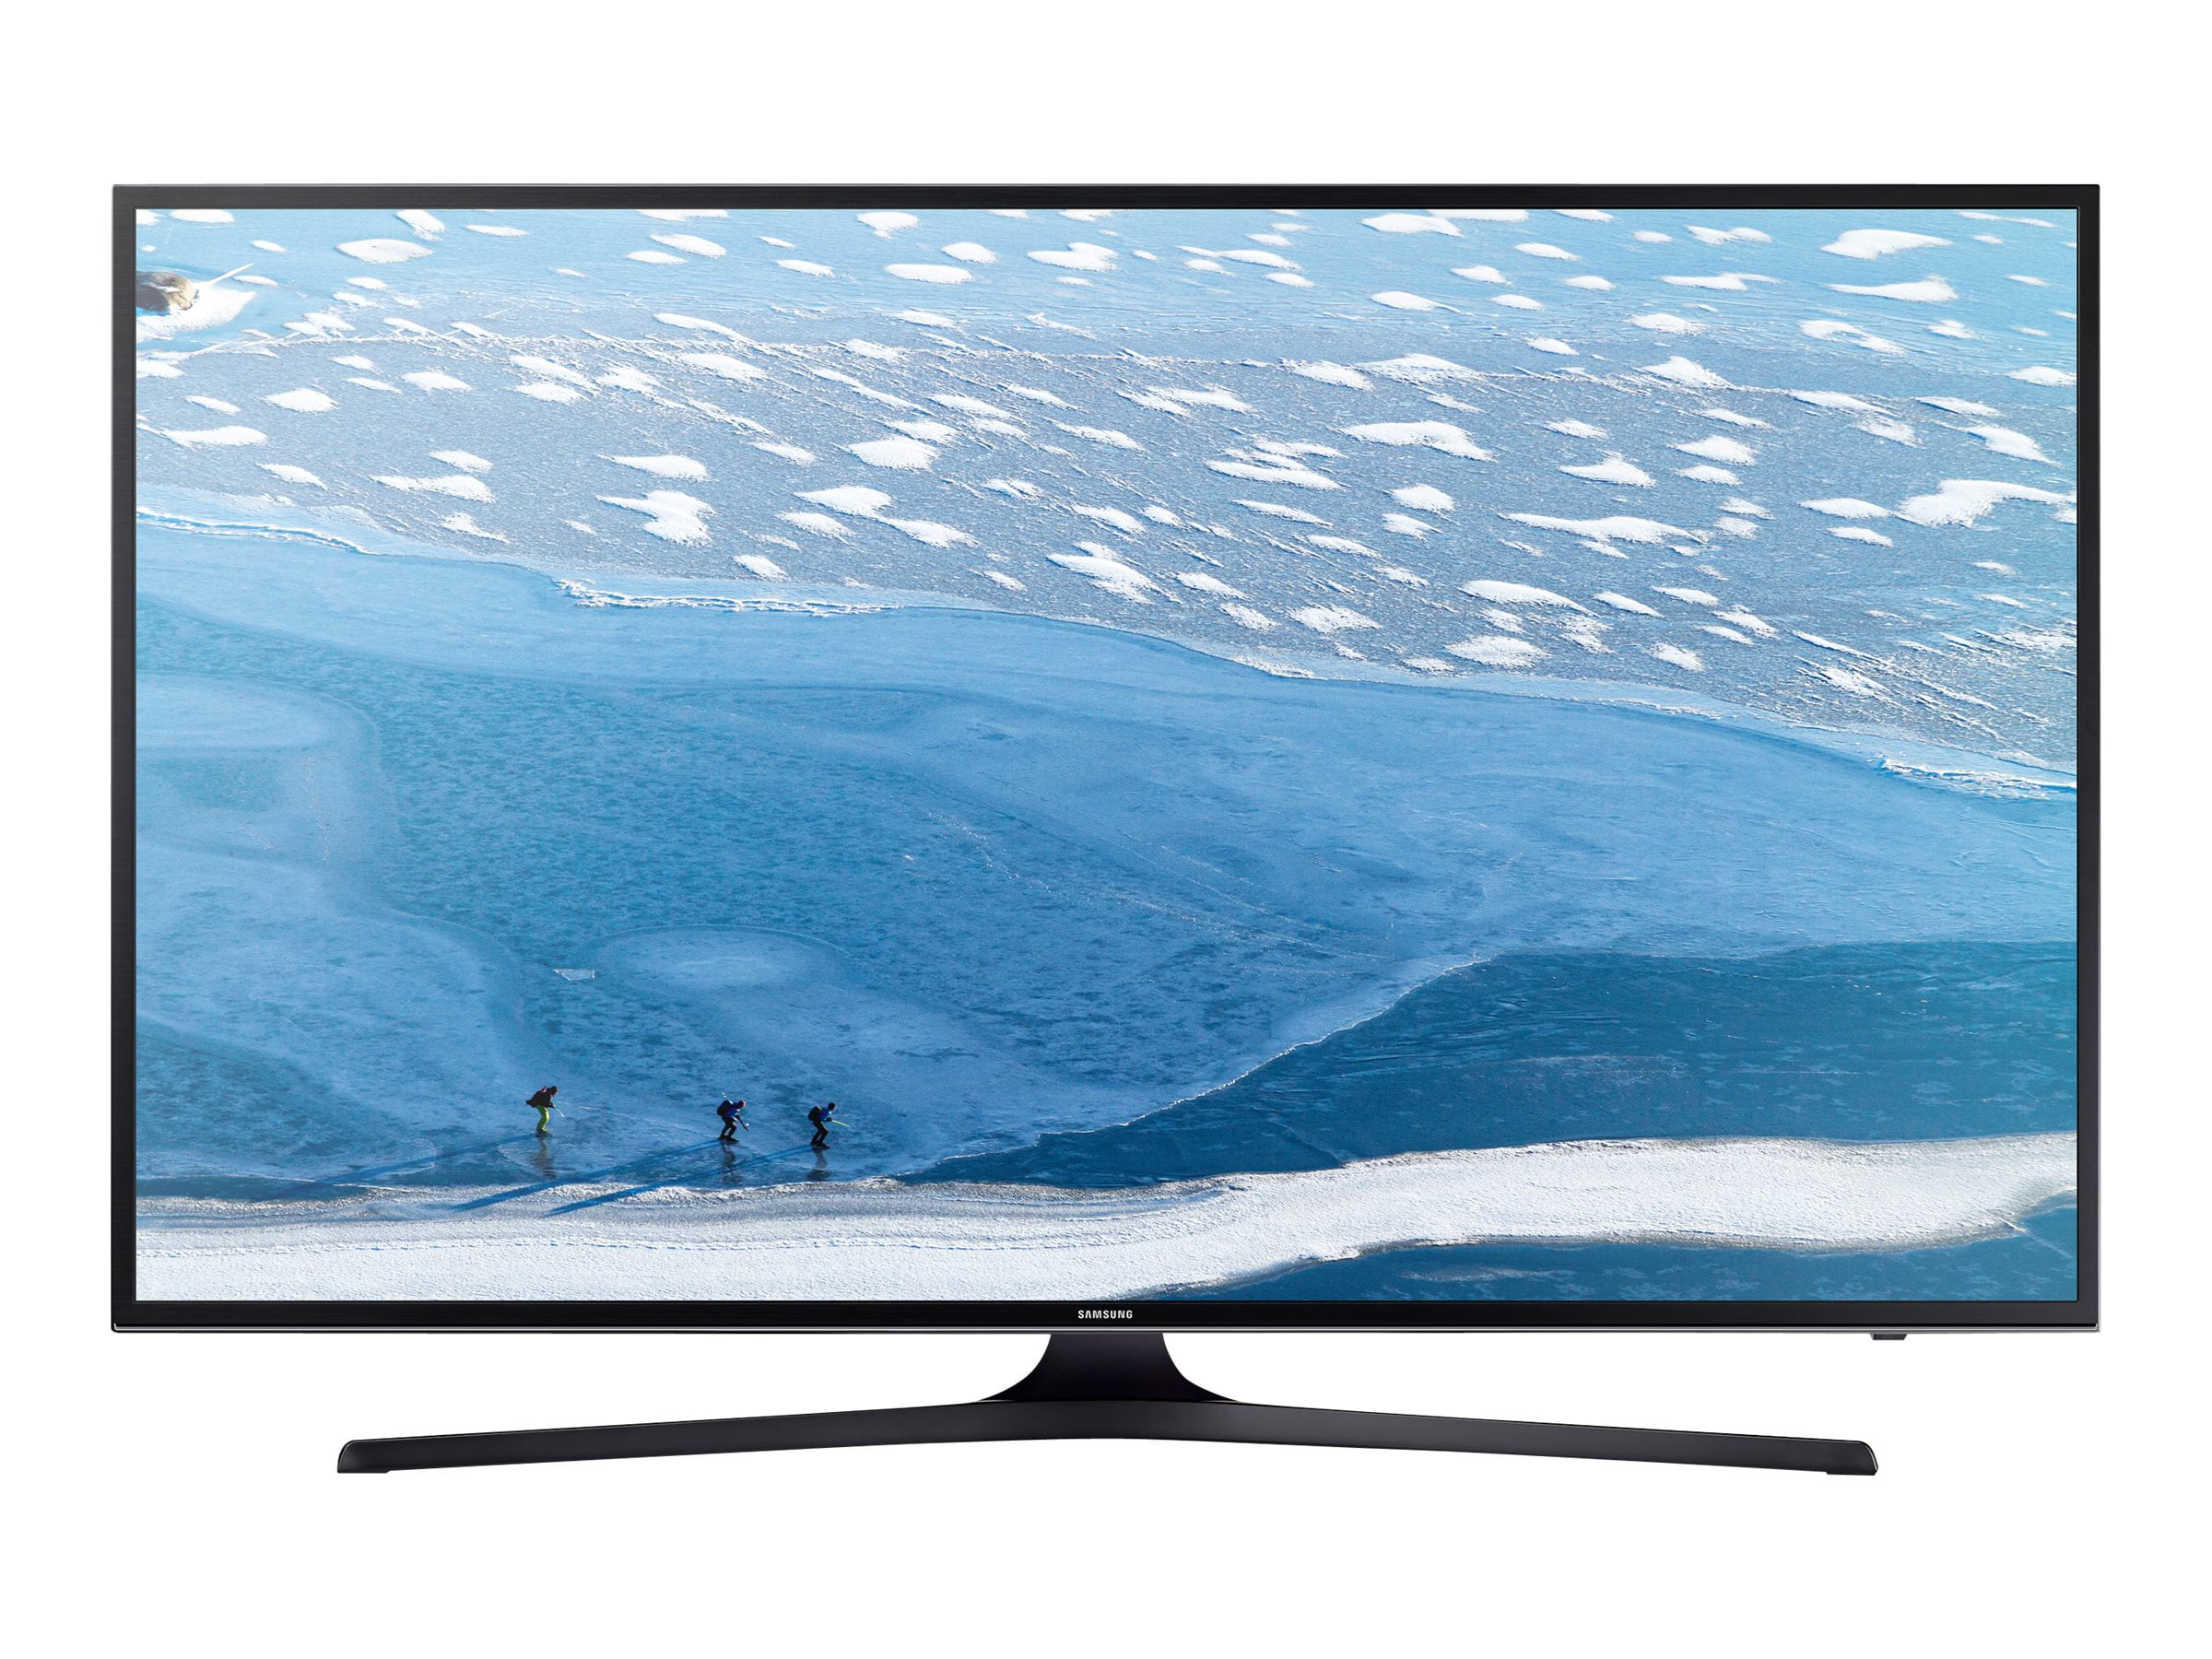 Samsung 50" class 4k (2160p) led tv (4k x 2k) (un50ku6300) - Walmart.com